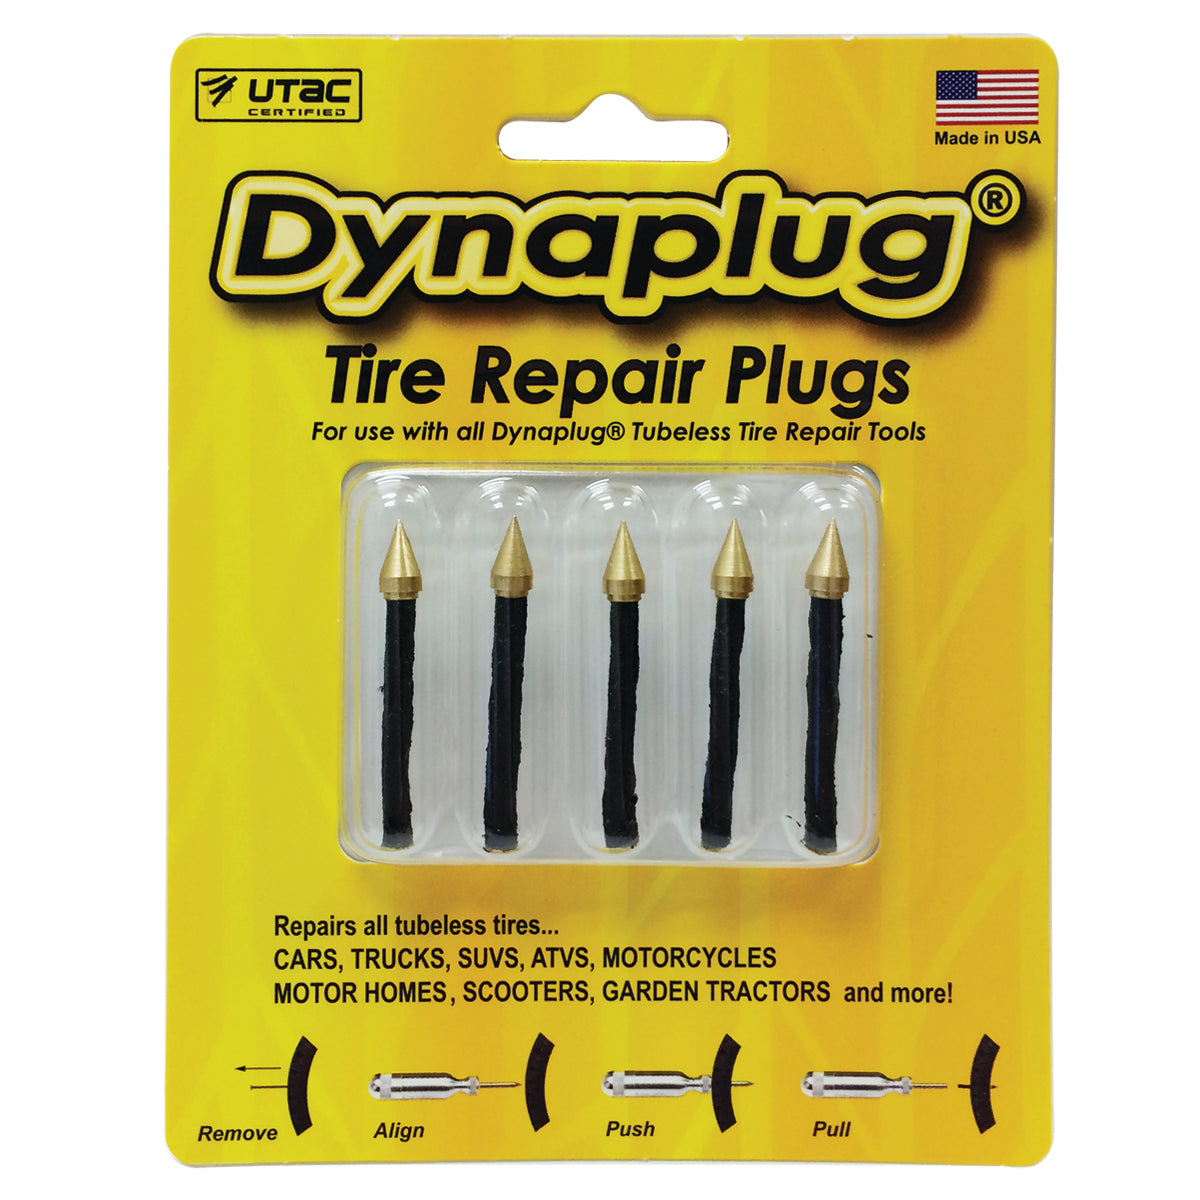 Dynaplug Review, Tubeless Tire Repair 